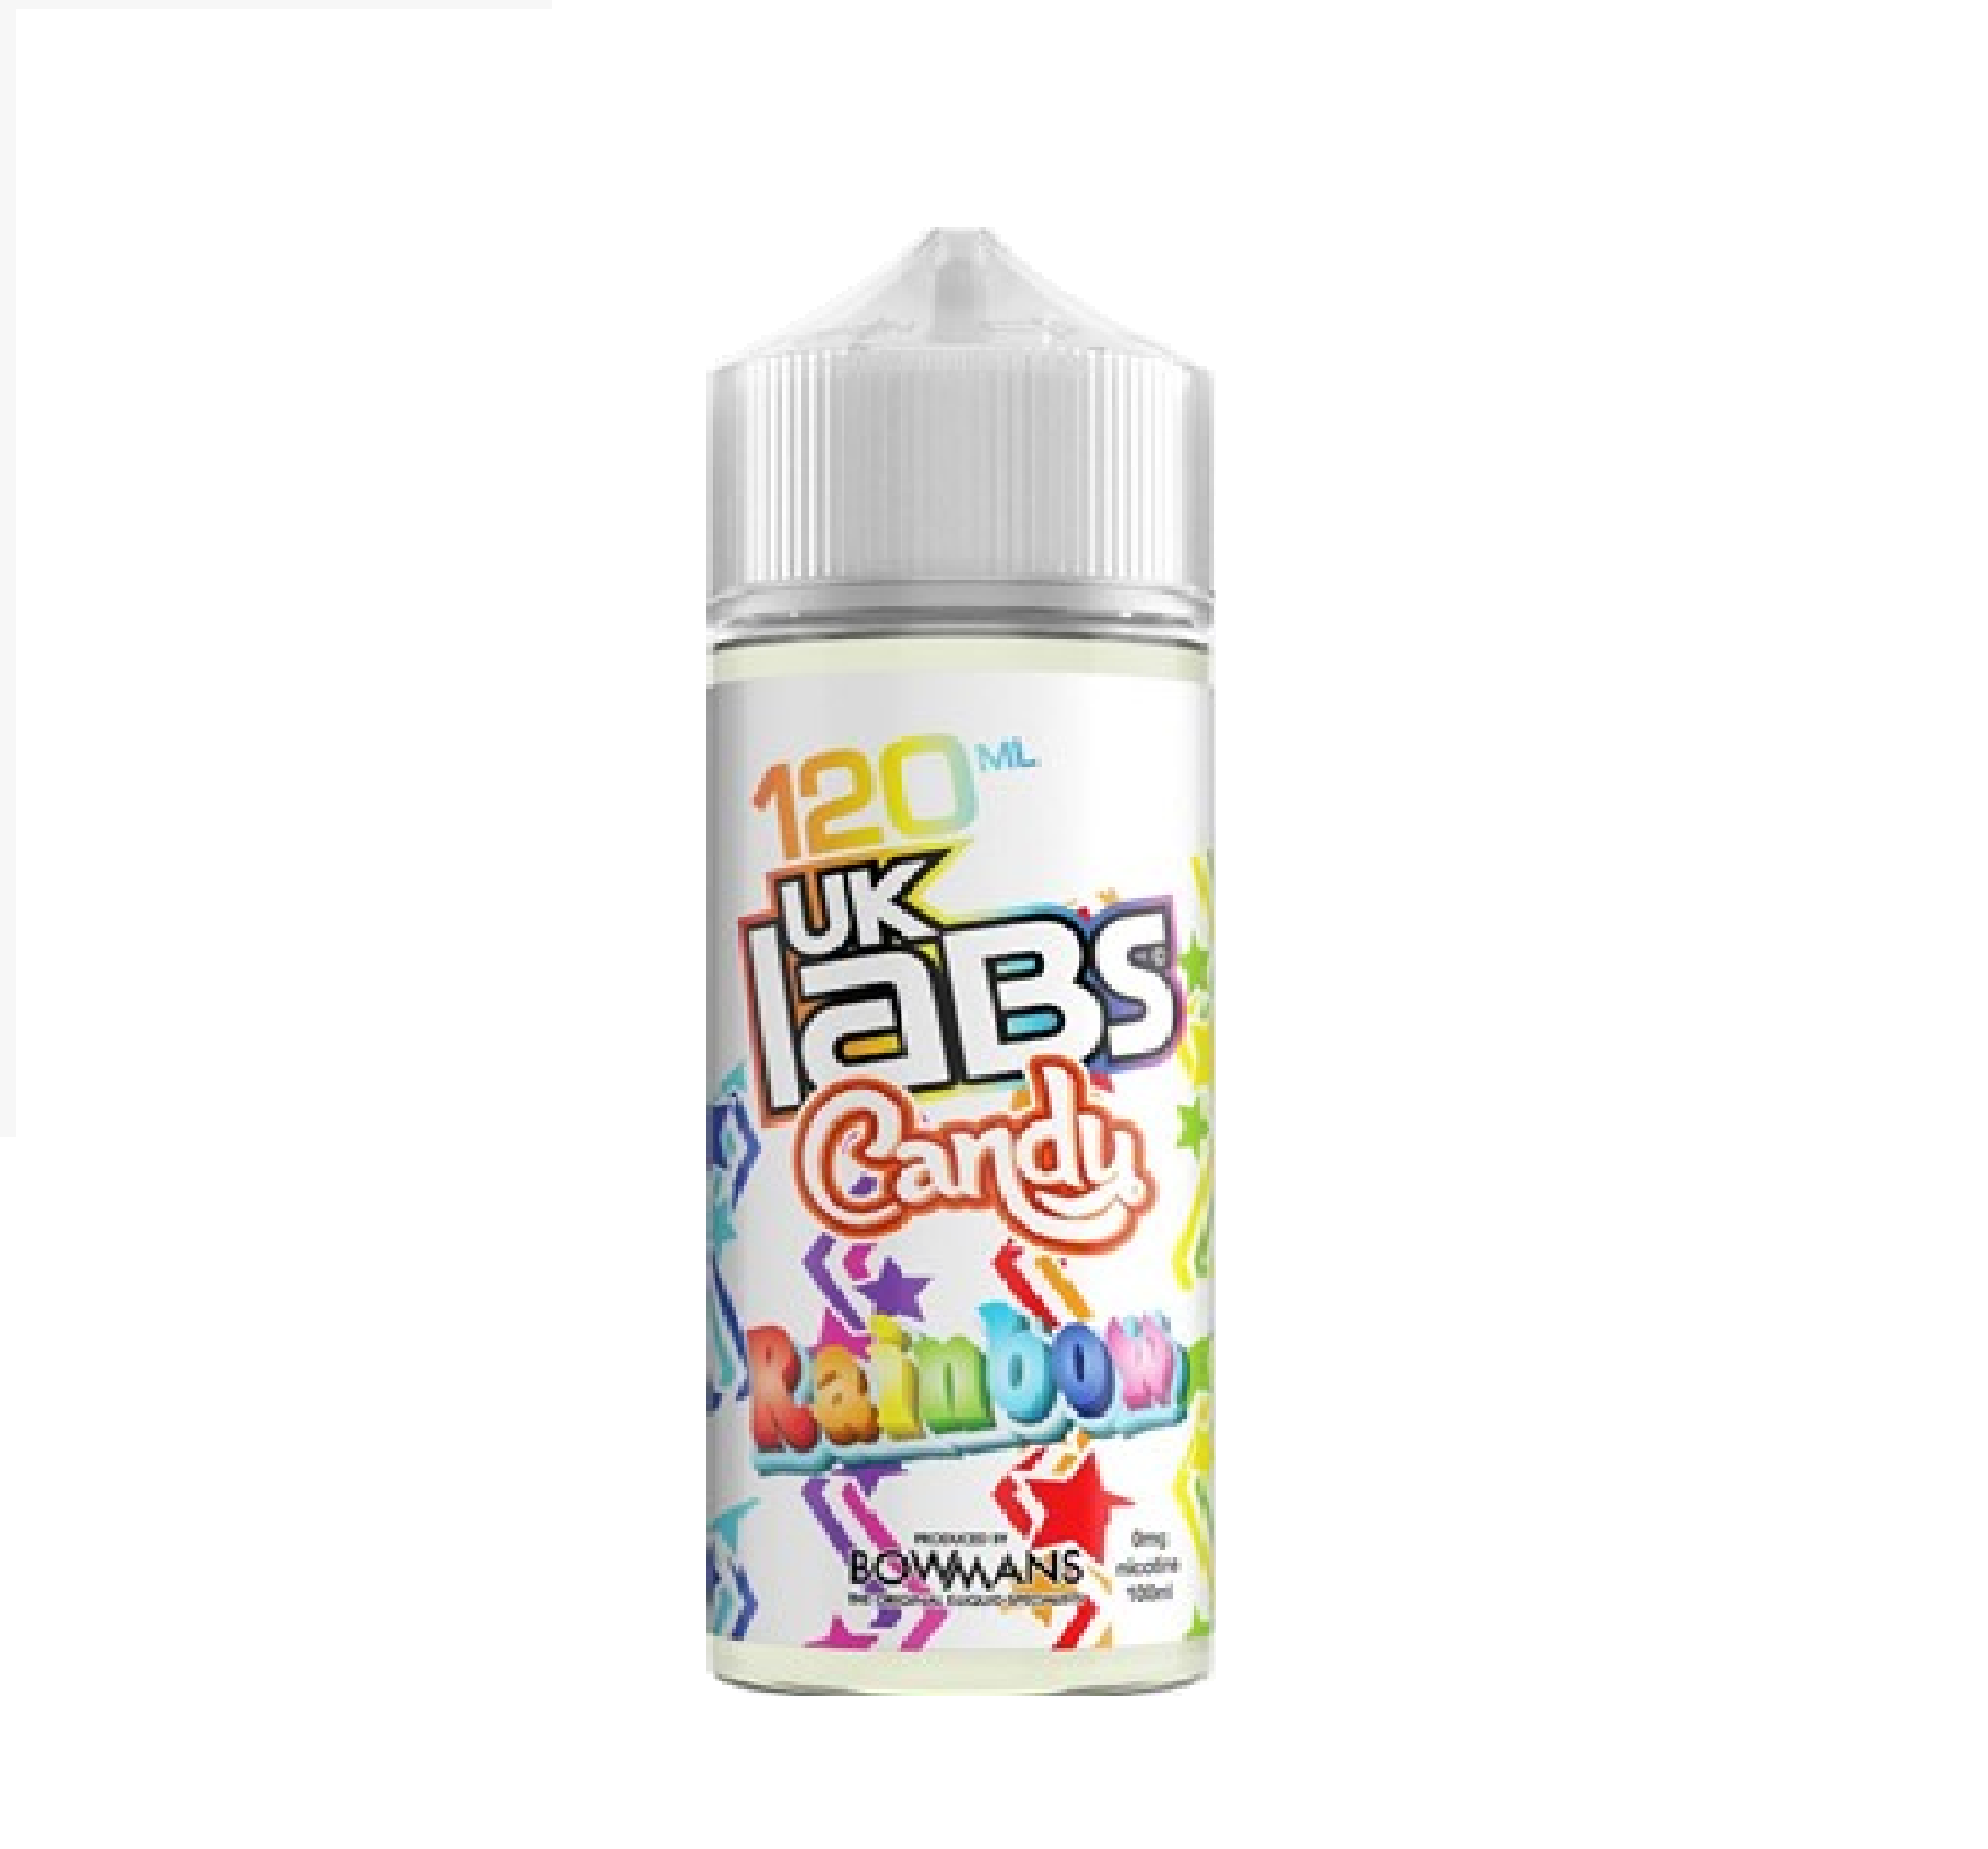  UK Labs E Liquid Candy - Rainbow - 100ml 